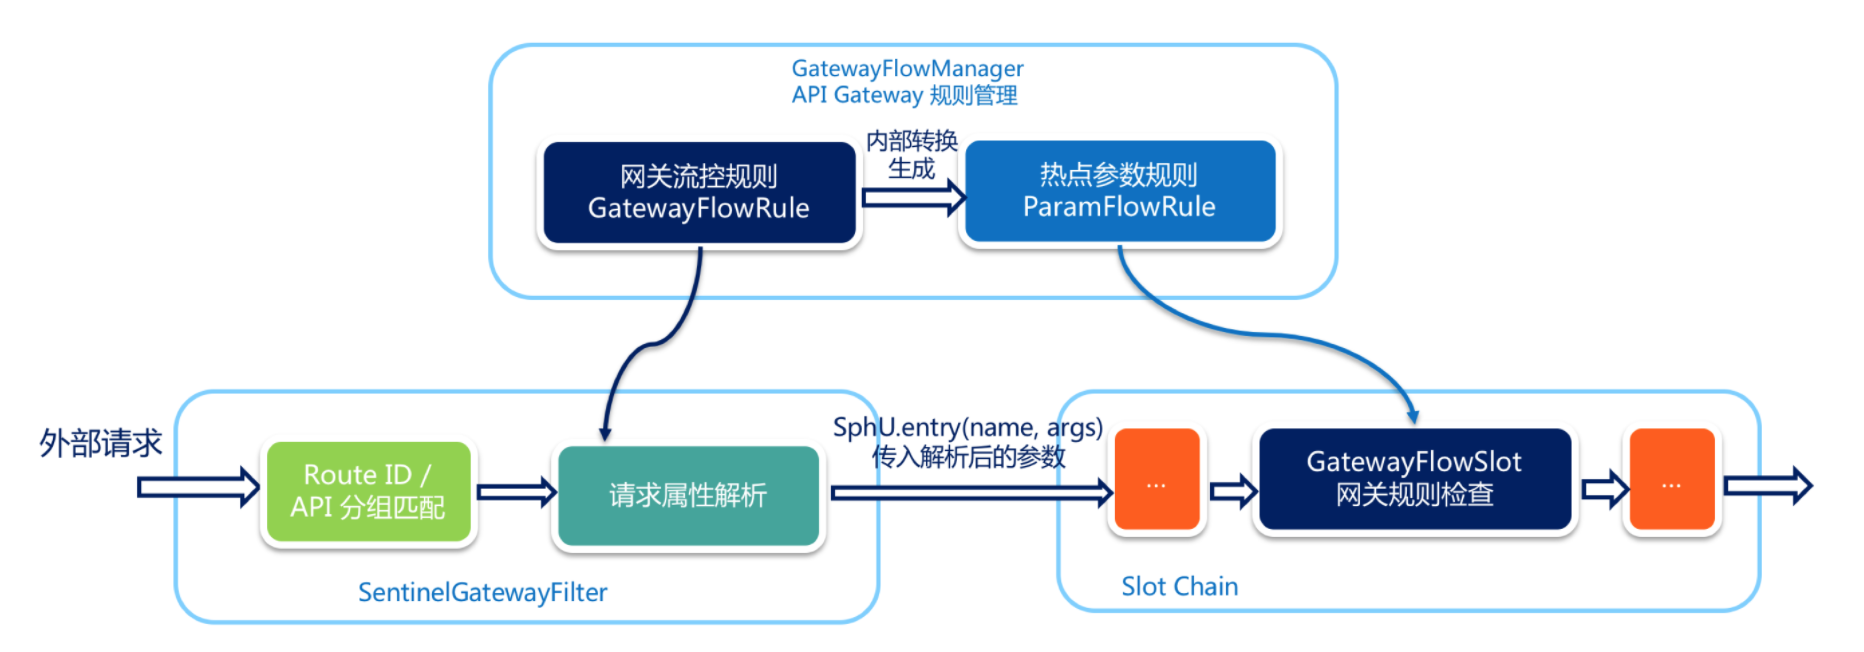 gateway-flow-control-impl